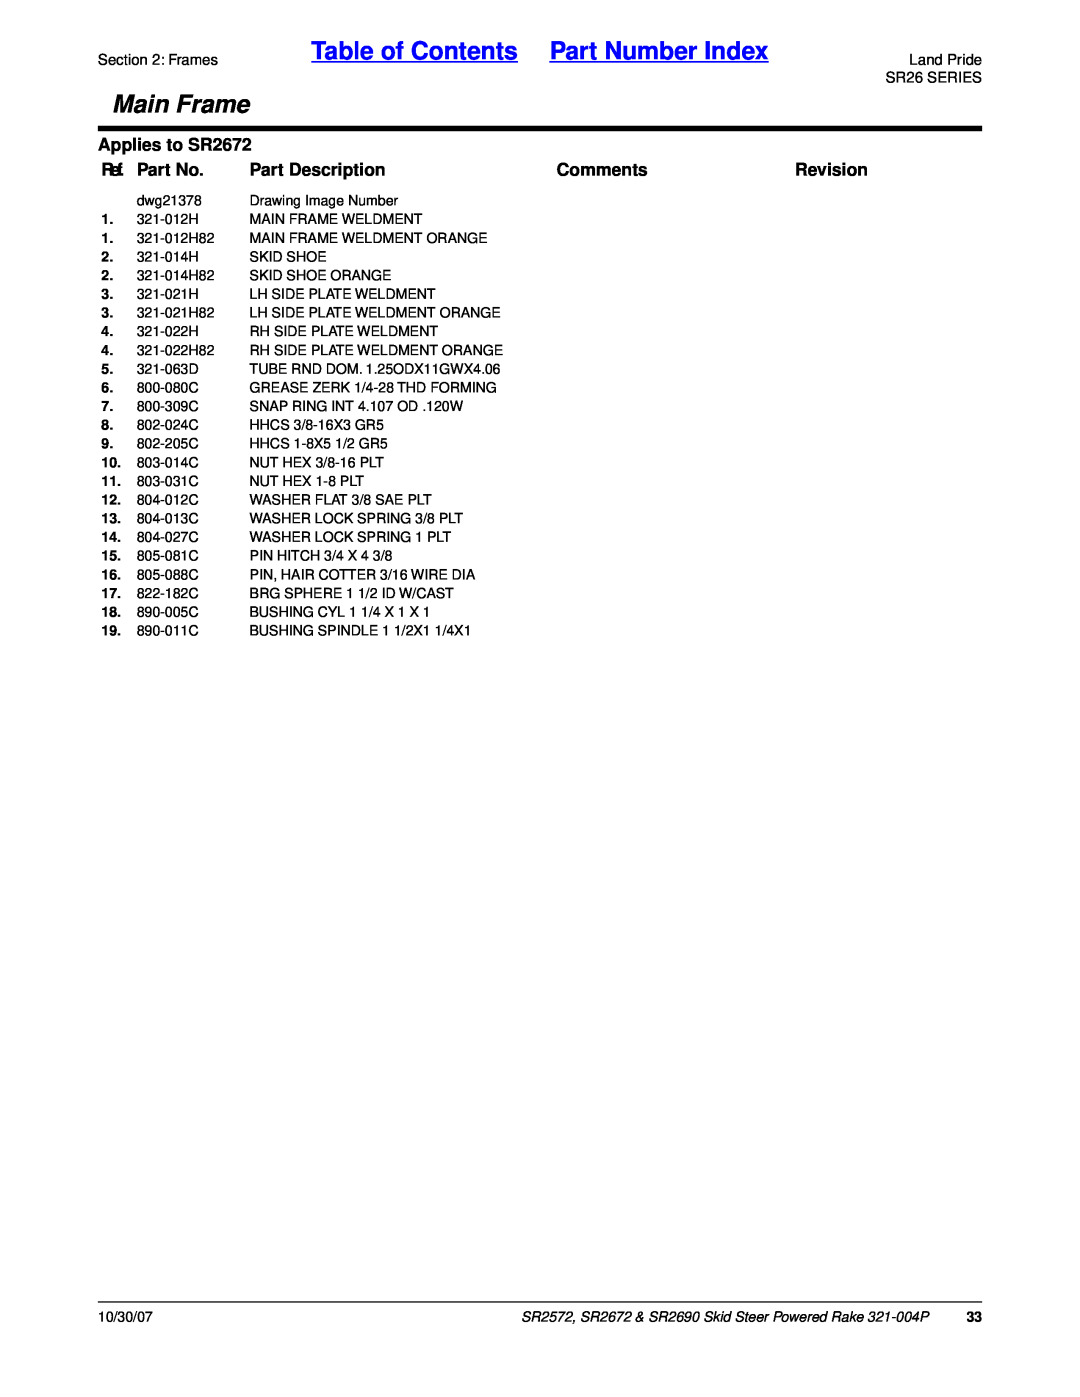 Land Pride SR2690 manual Table of Contents Part Number Index, Main Frame, Applies to SR2672, Ref. Part No, Part Description 